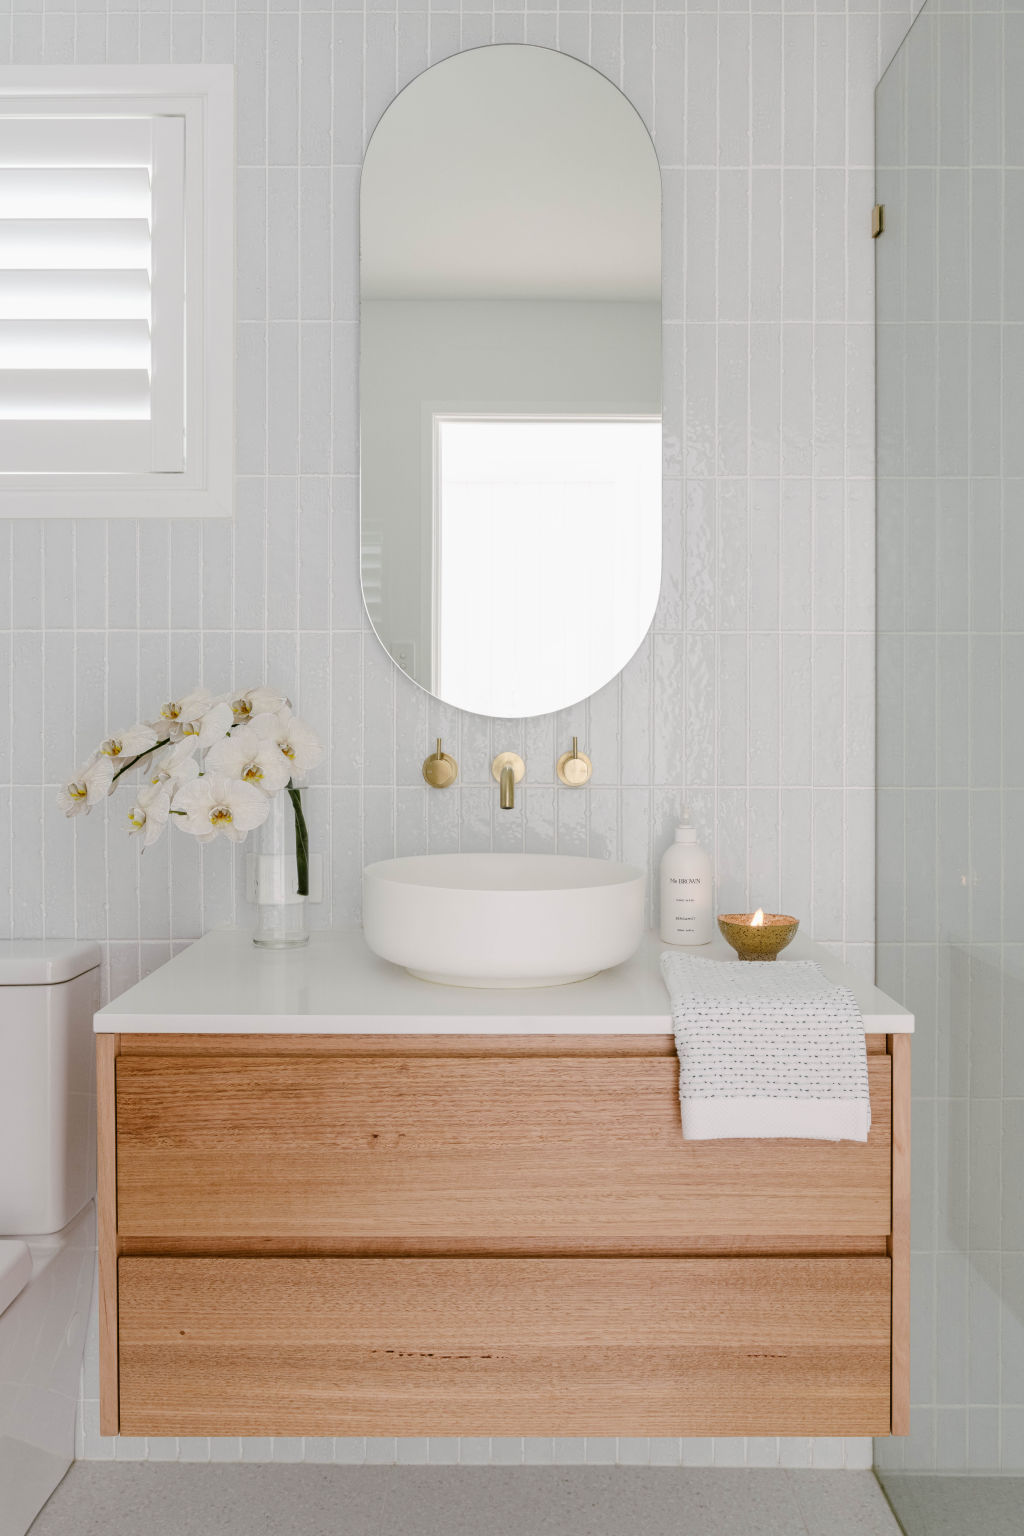 The bathroom features handmade “kit-kat” tiles, a custom vanity and brushed brass tapware. Photo: Hannah Puechmarin